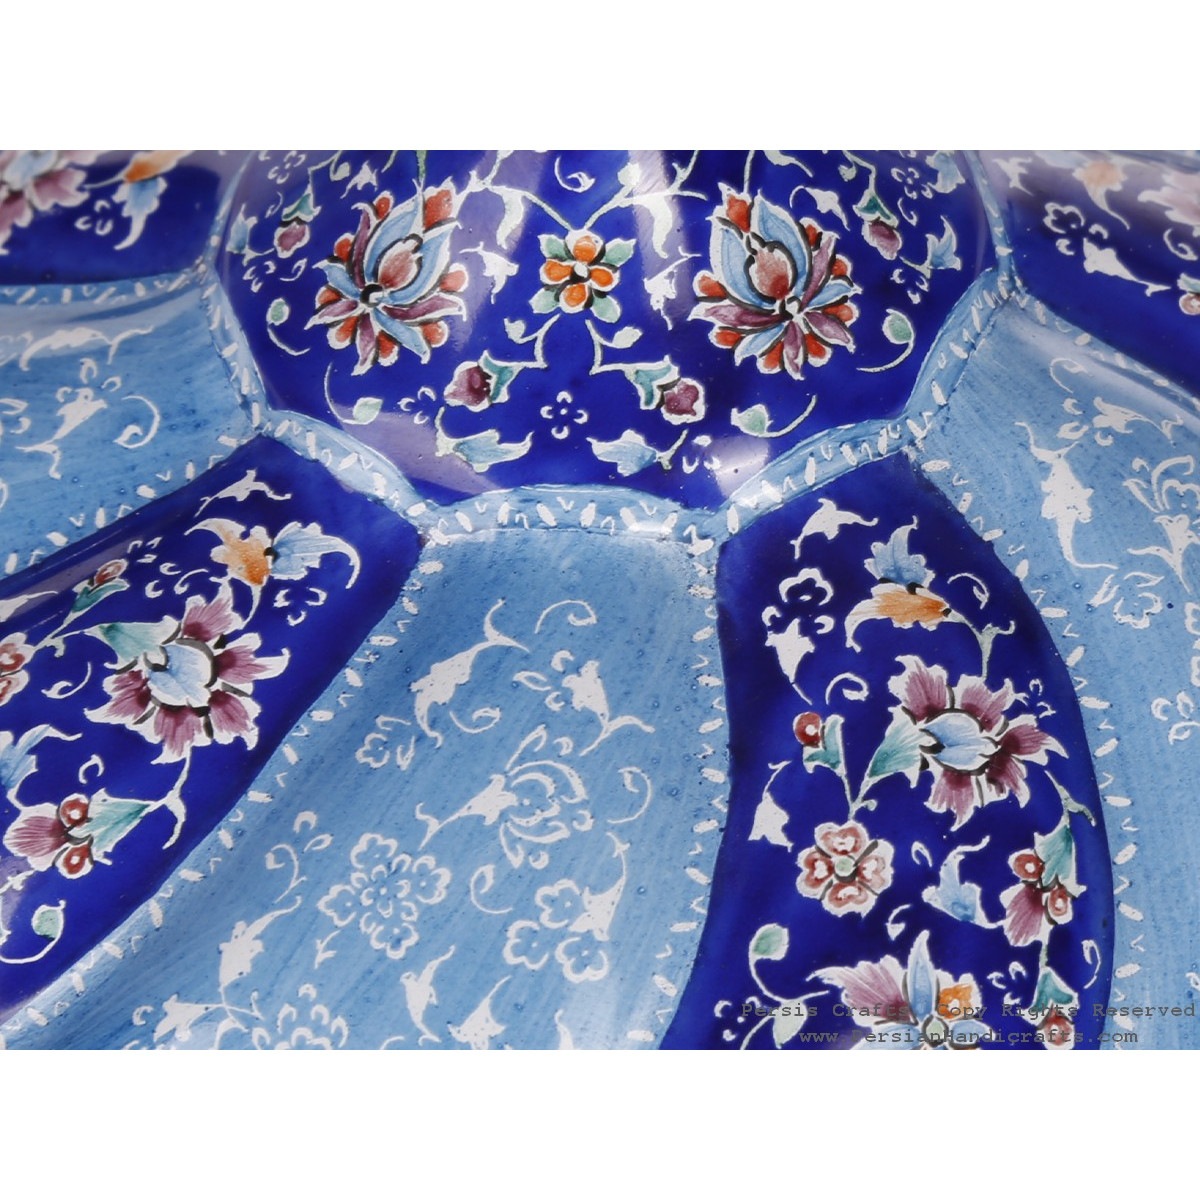 Premium Quality Enamel Minakari Large Candy Pot - HE3613-Persian Handicrafts